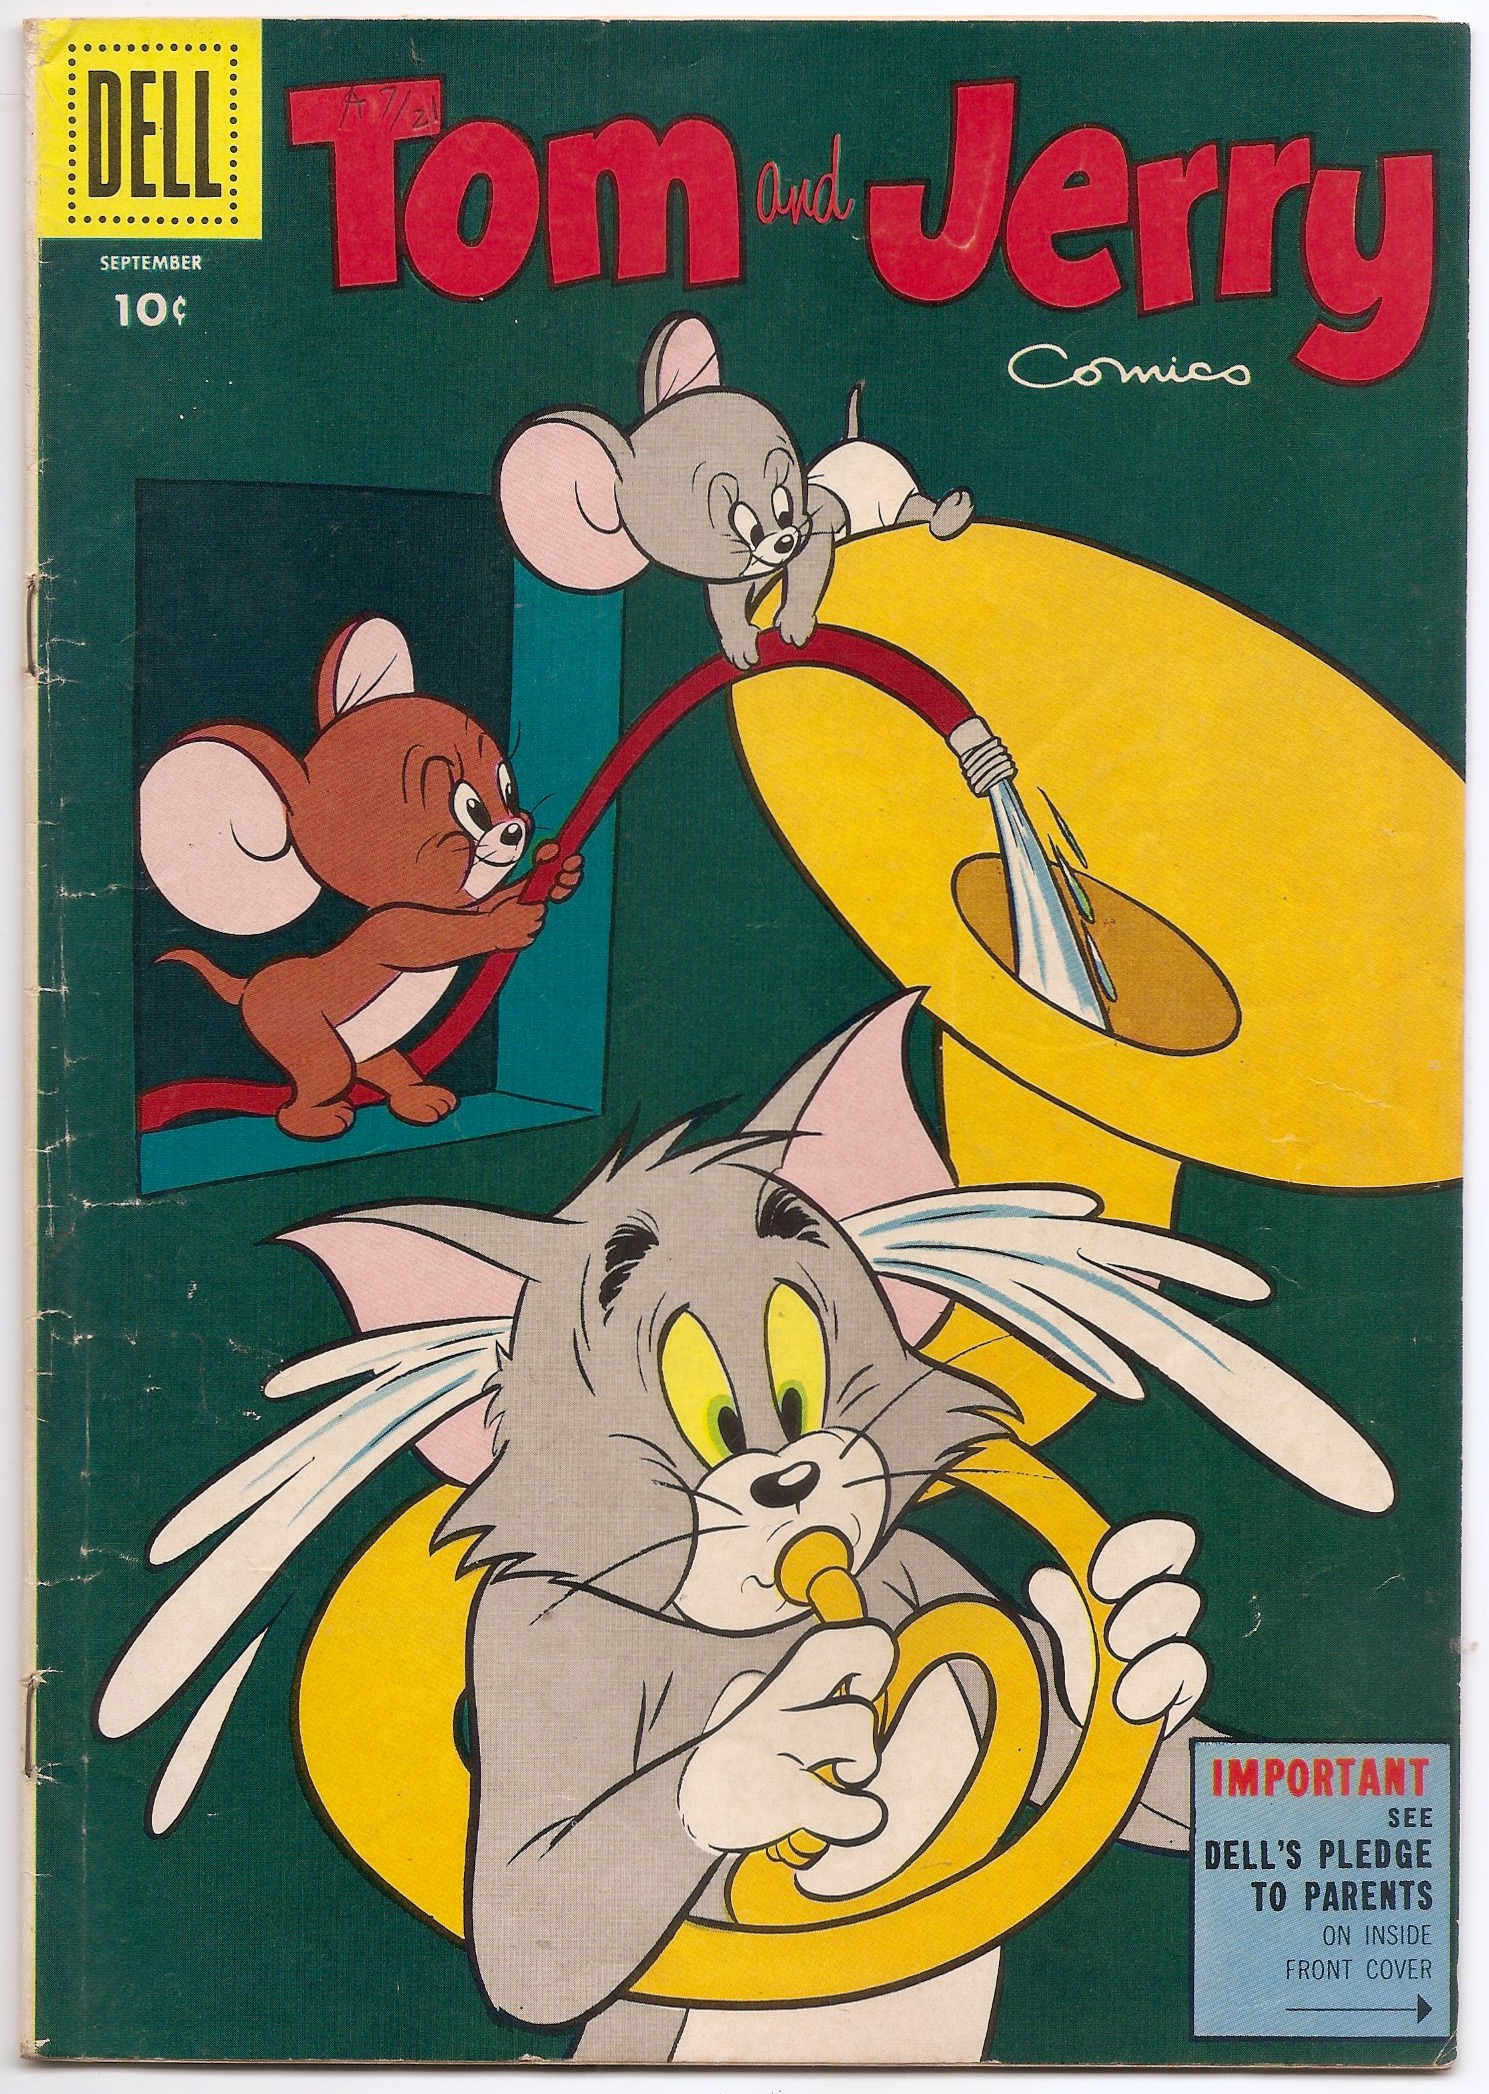 Tom and Jerry Comics # 134 (September 1955) - Brooklyn Comic Shop